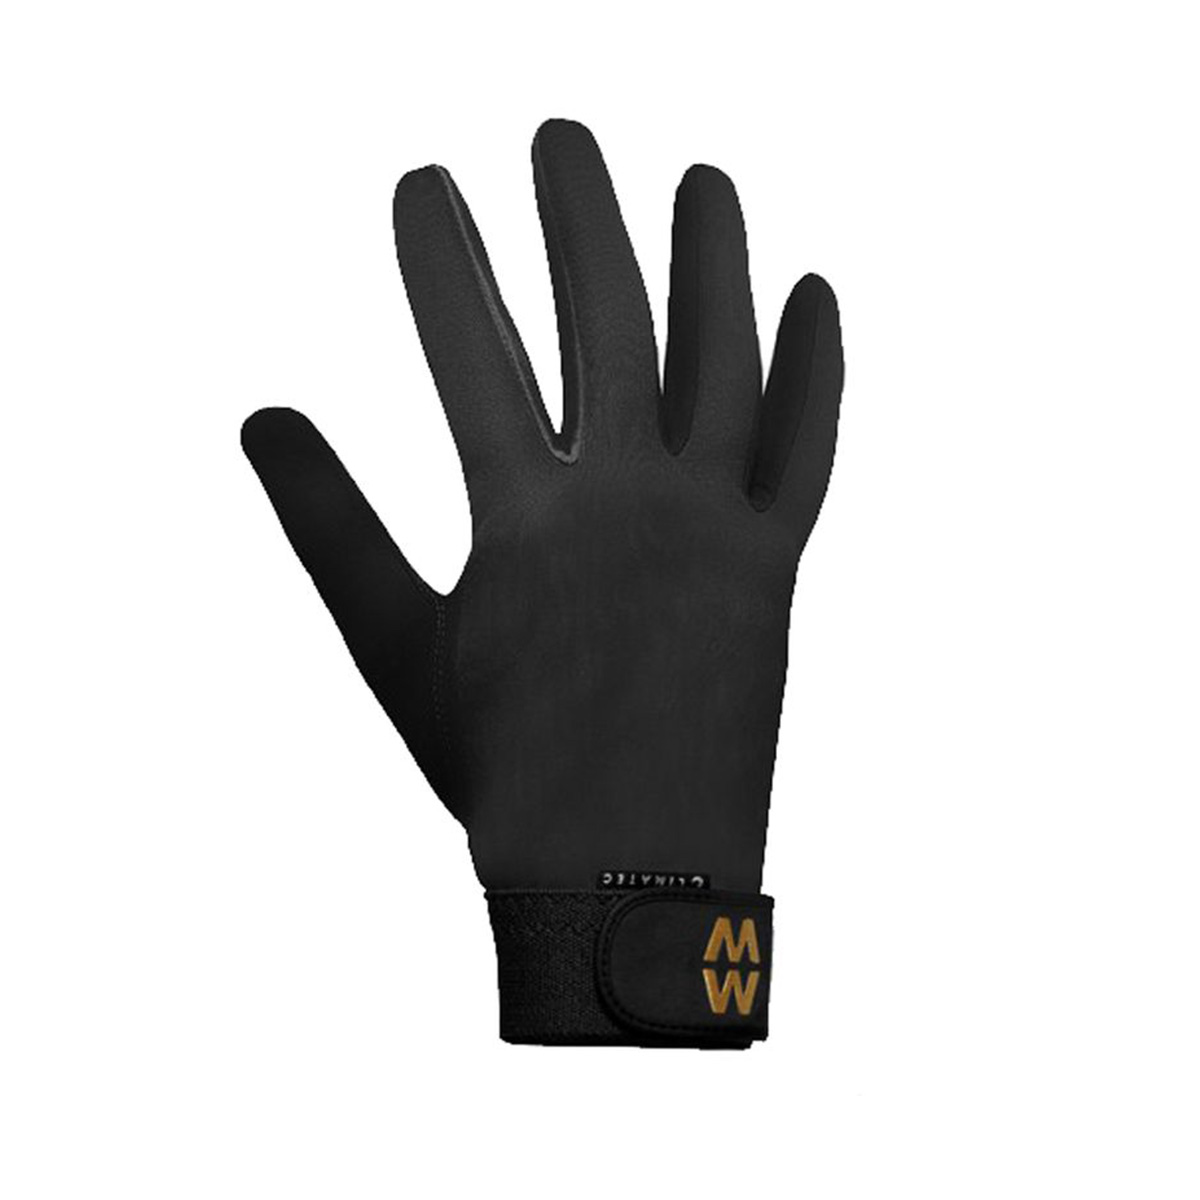 MacWet Climatec Handschuh lang, 7,5 schwarz